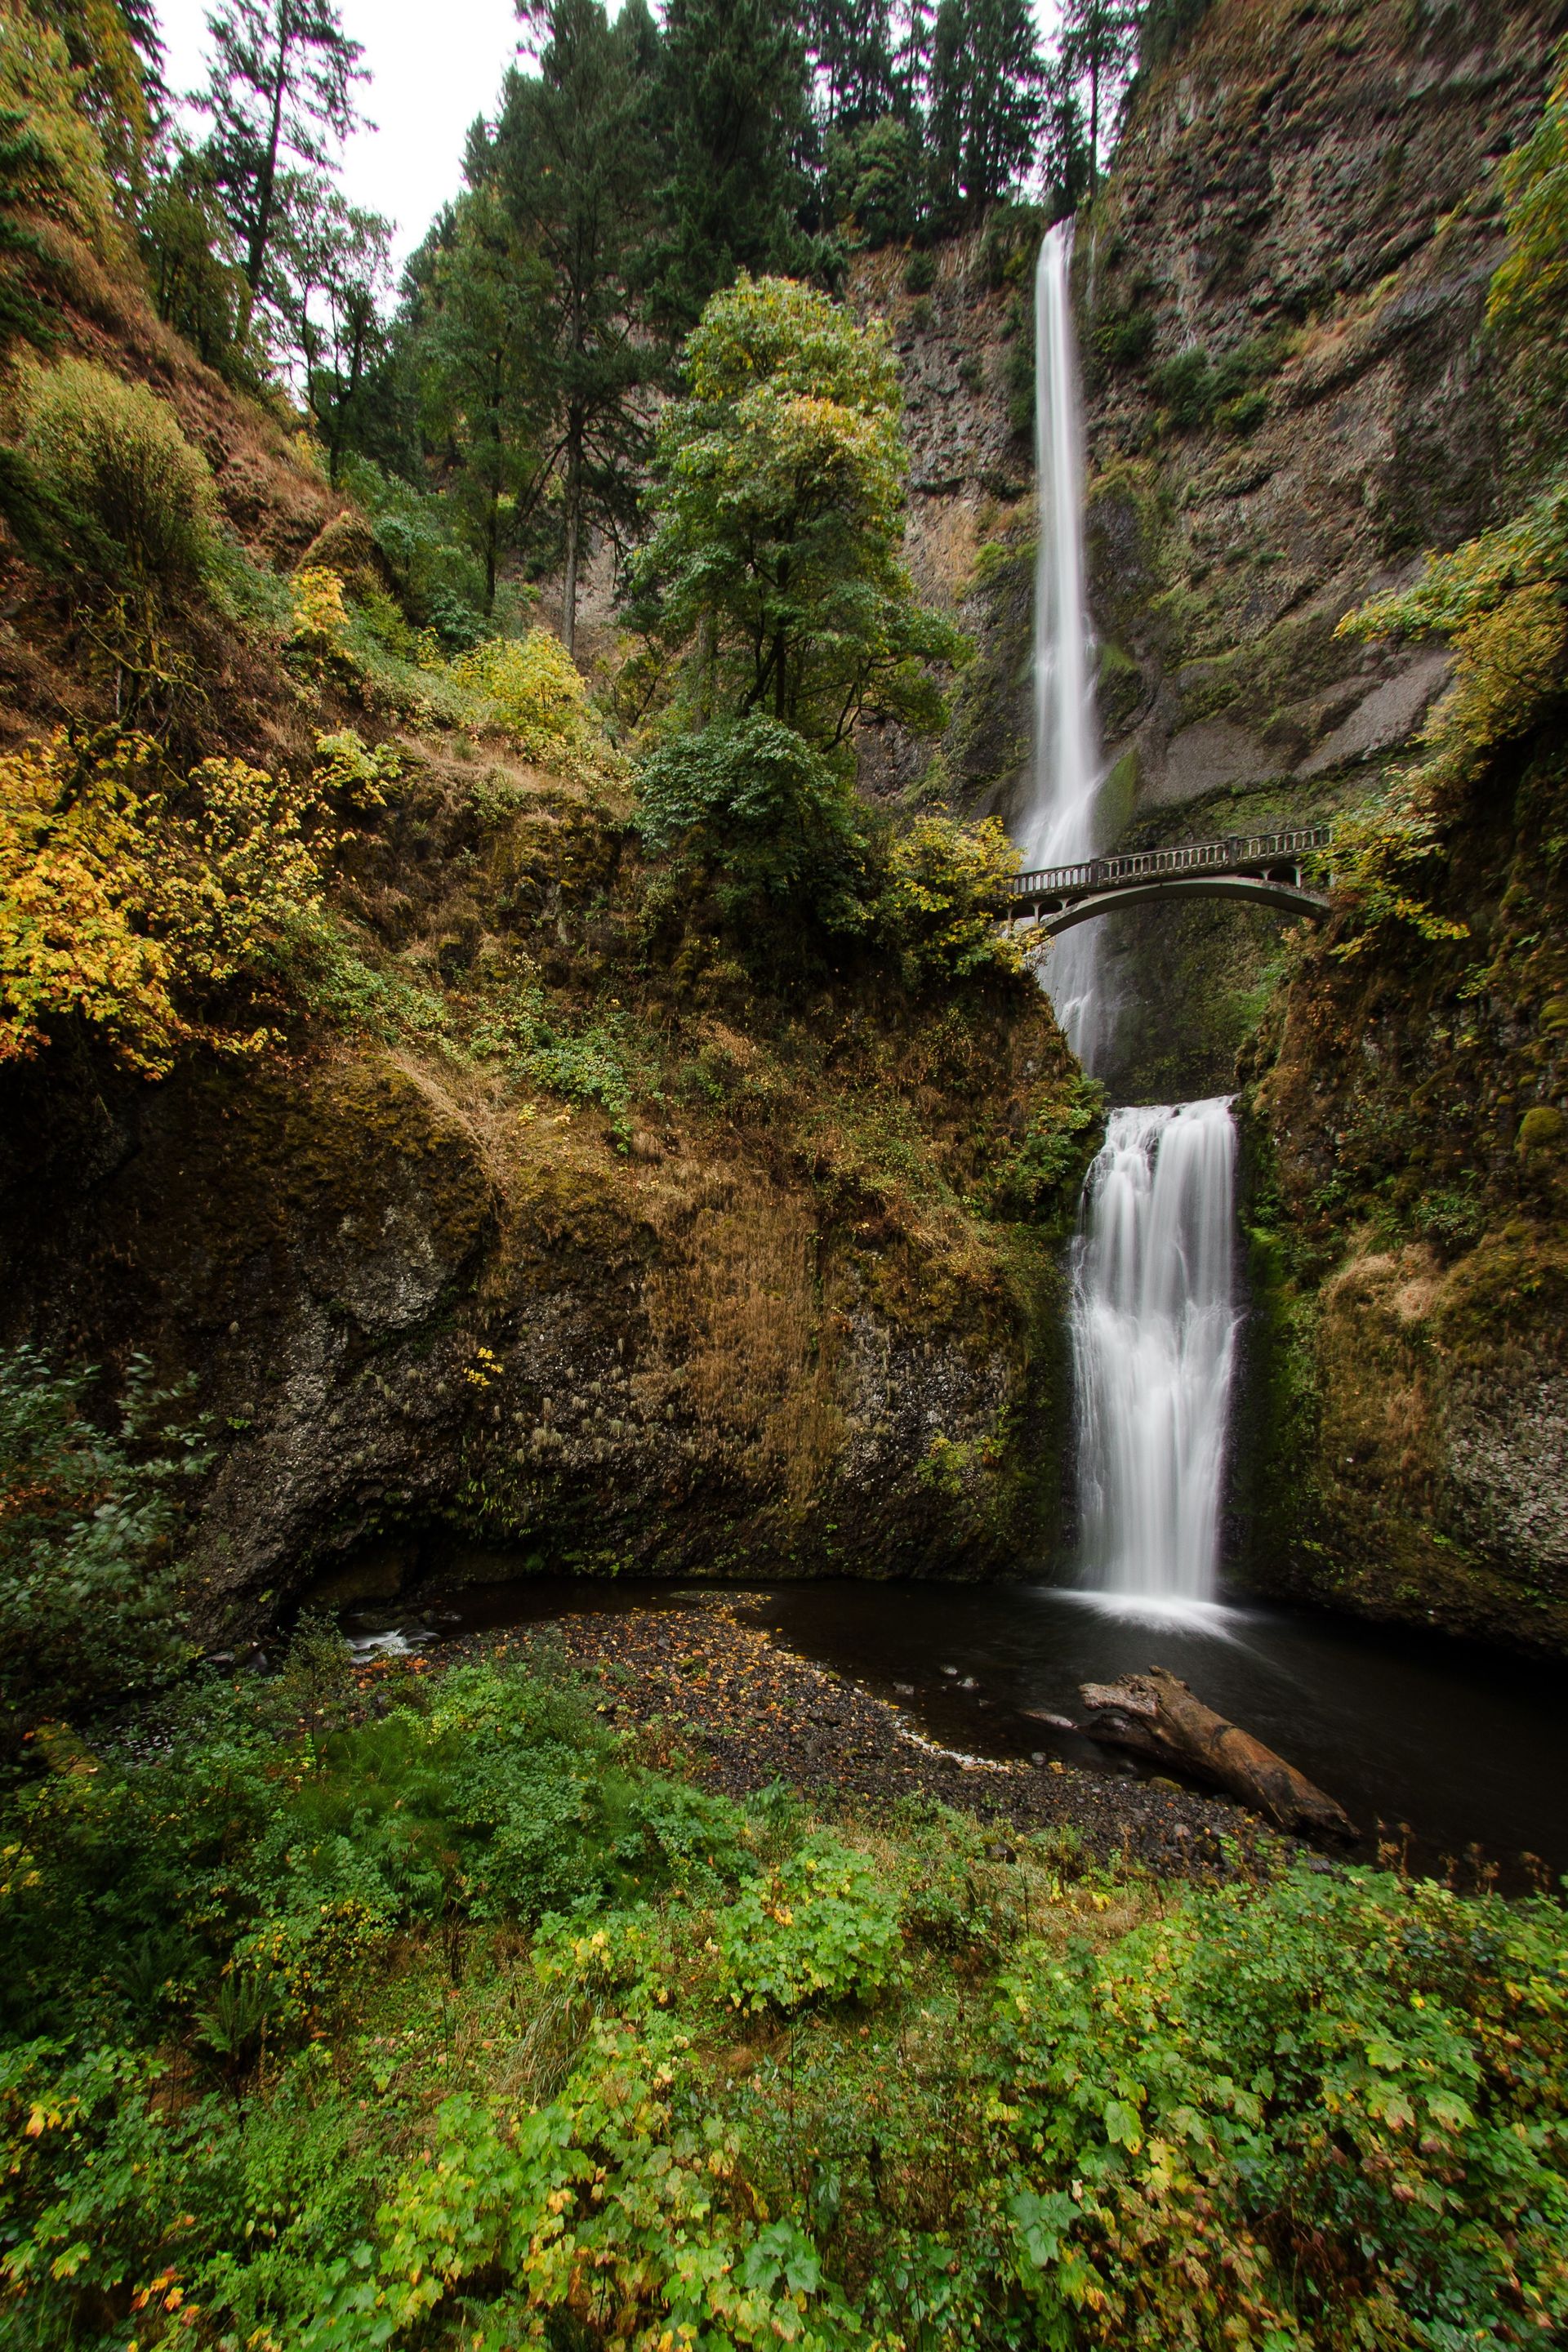 The Multnomah Falls run off the Columbia River in Oregon.